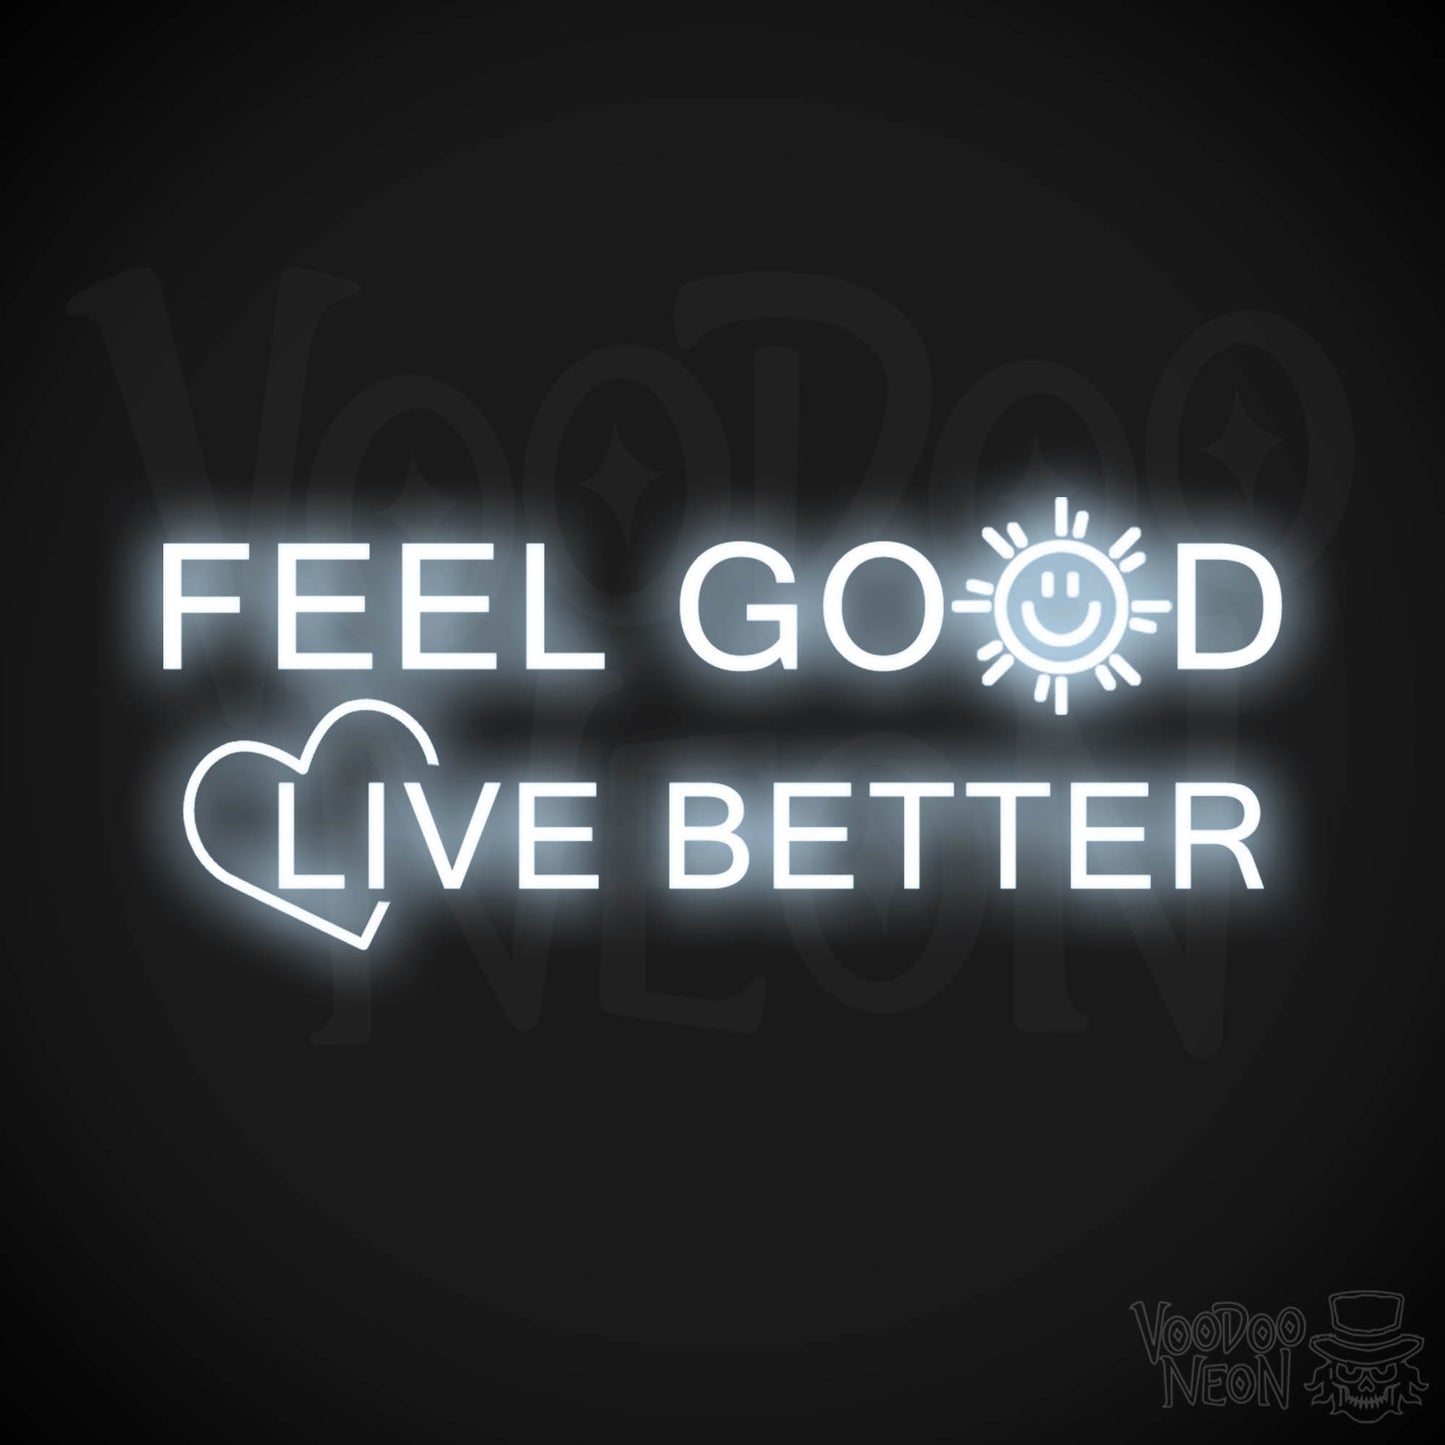 Feel Good Live Better Neon Sign - Feel Good Live Better Sign - Color Cool White